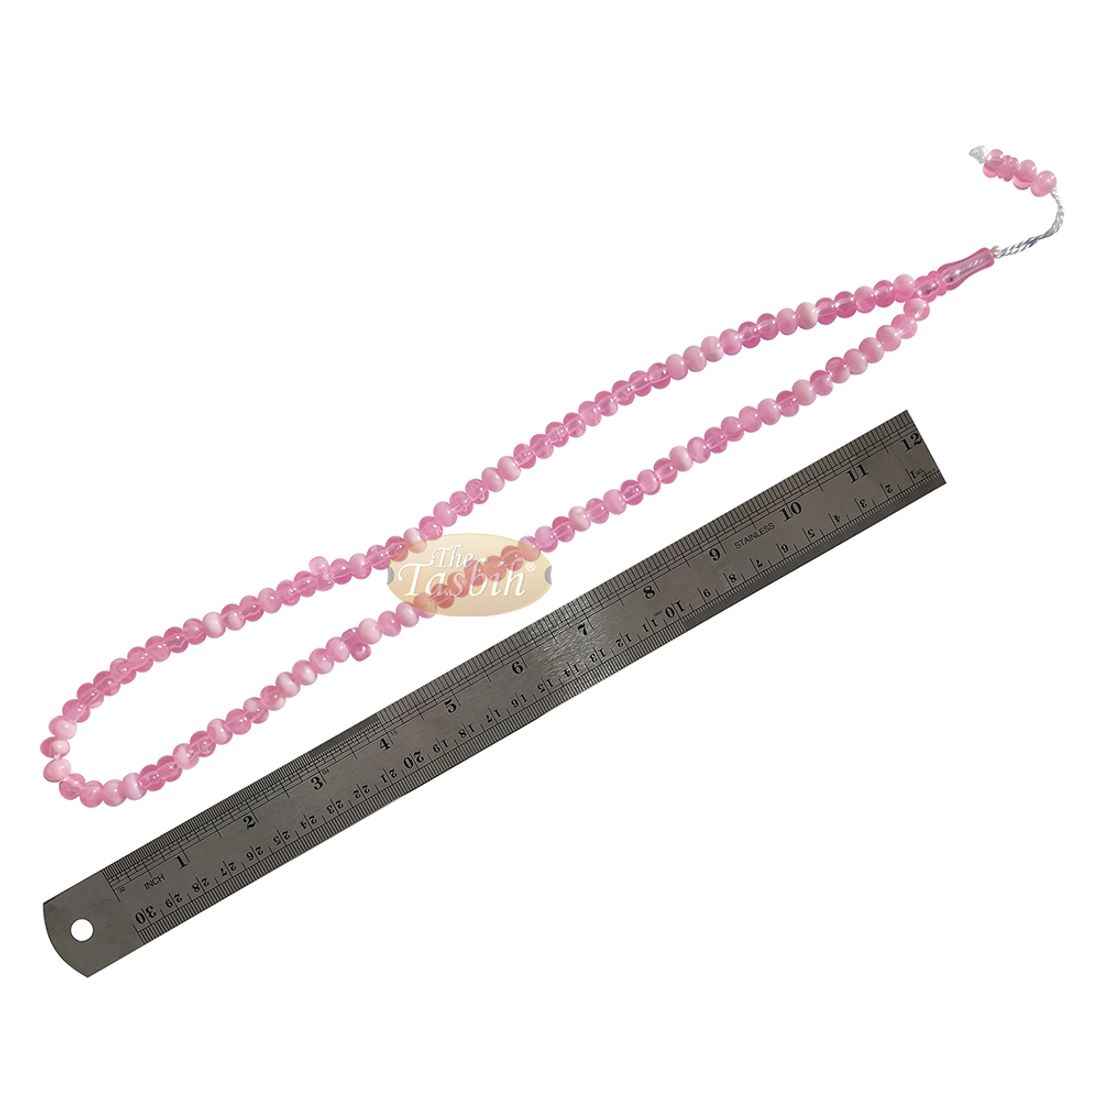 Muslim Prayer Beads – Marble Pink 7x9mm Oval Plastic Beads 99ct Dhikr Tasbih Sibha